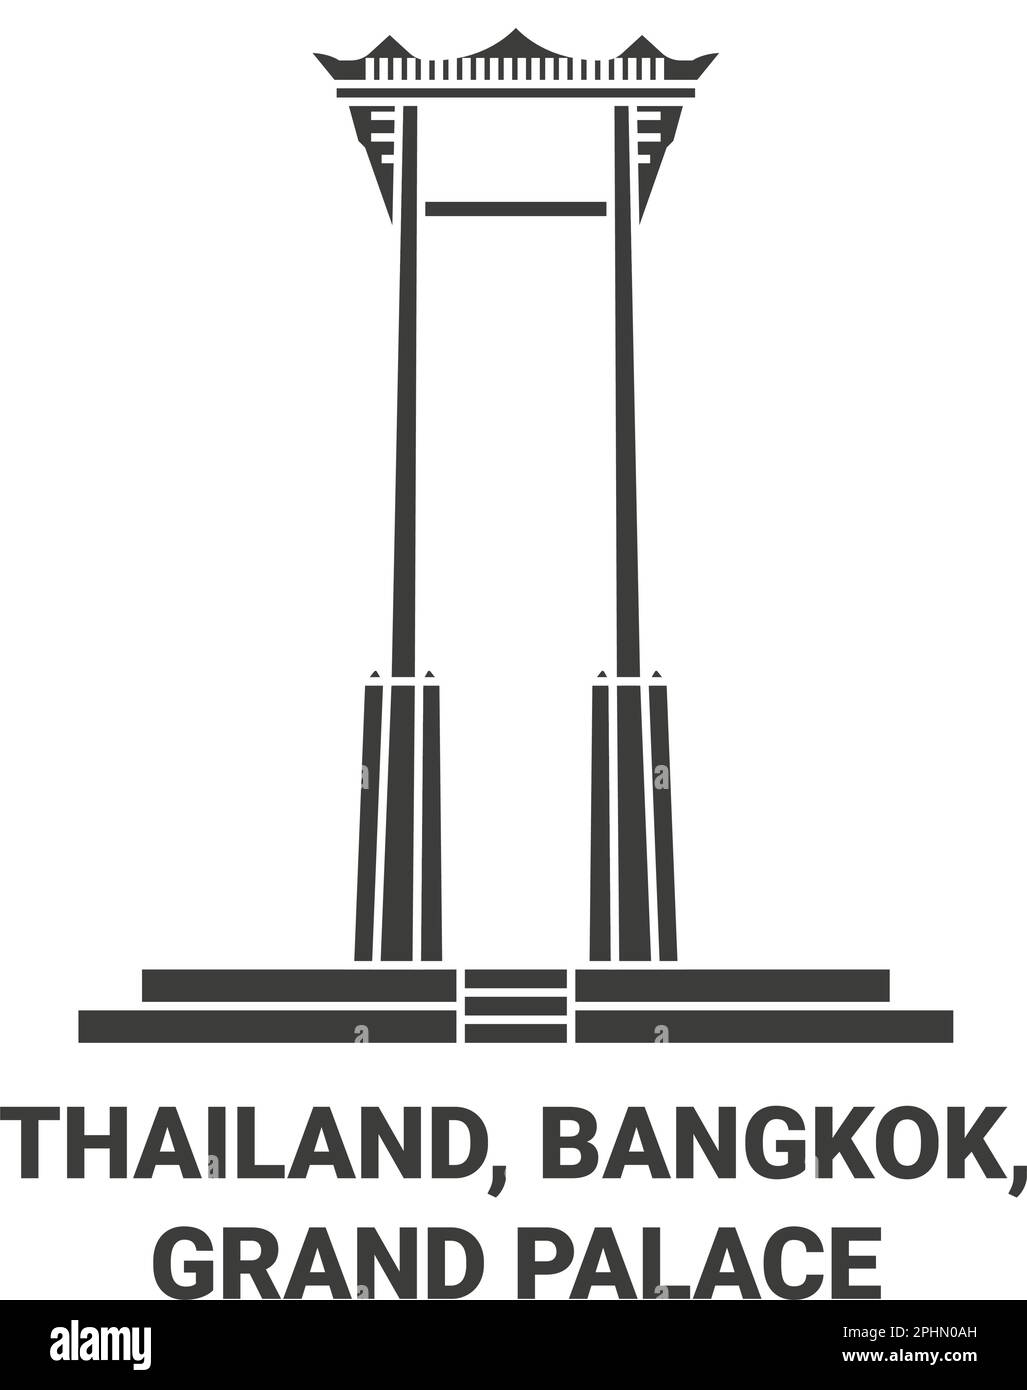 Thailand, Bangkok, Grand Palace travel landmark vector illustration Stock Vector